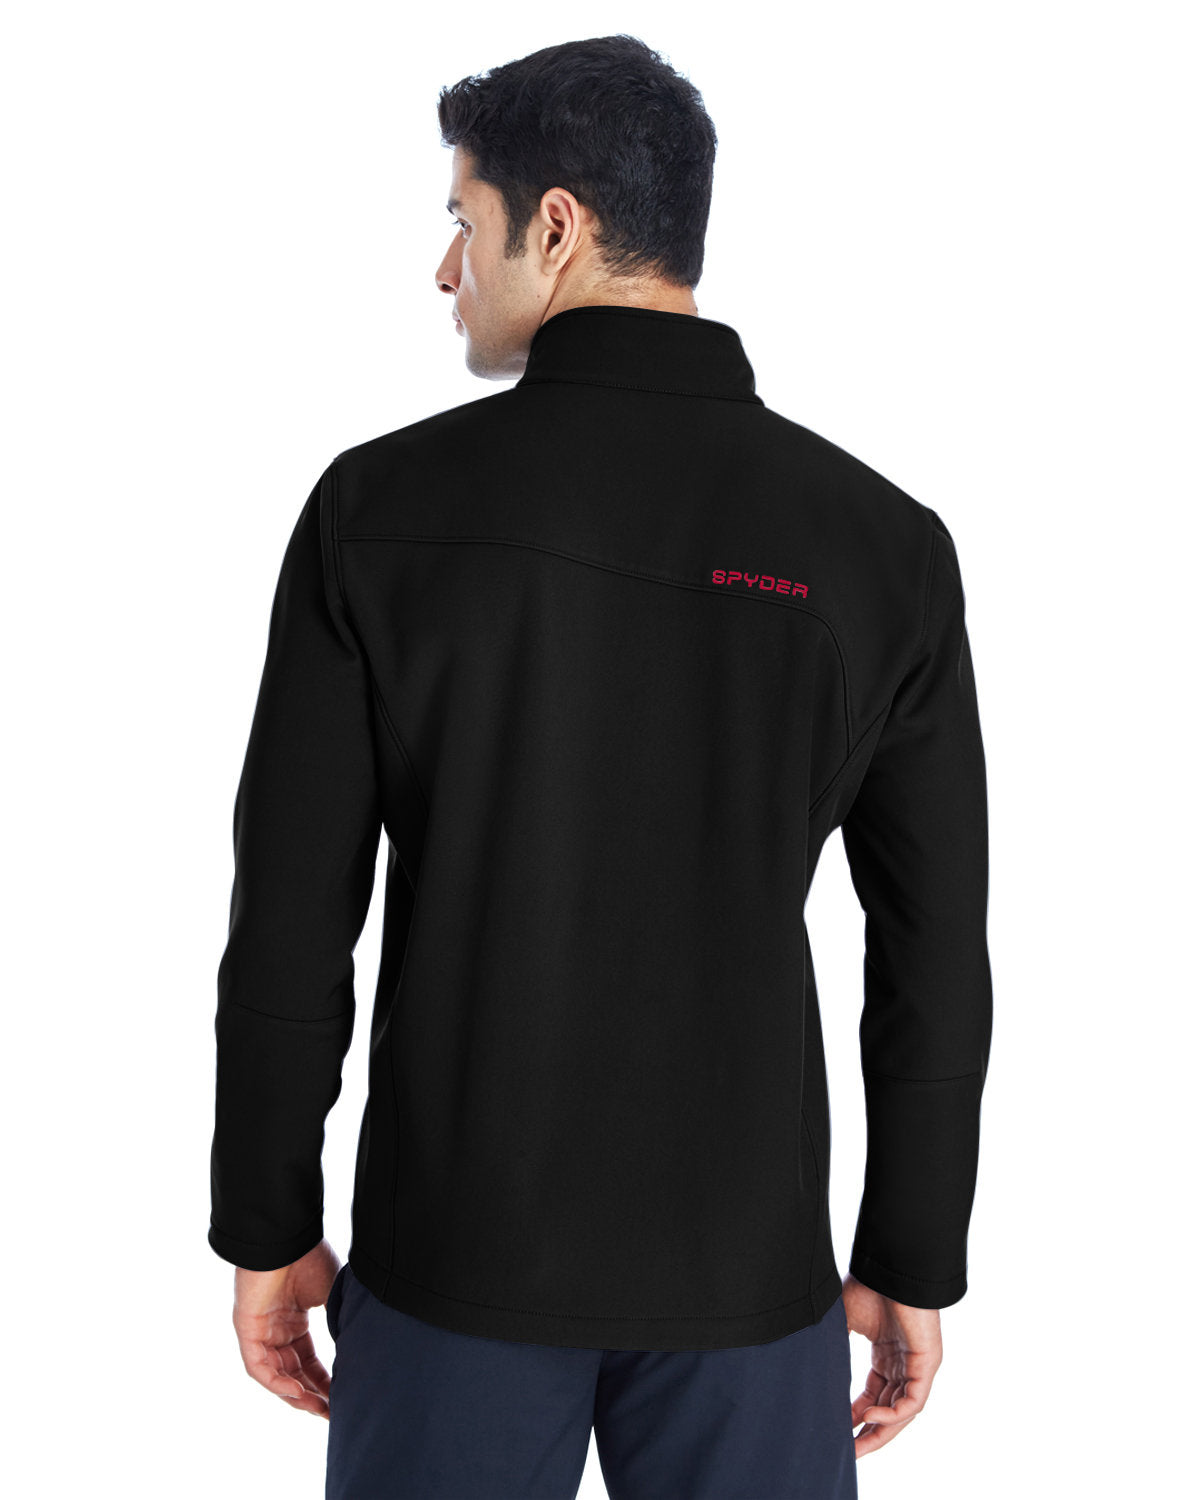 spyder_187334_black/ red_company_logo_jackets